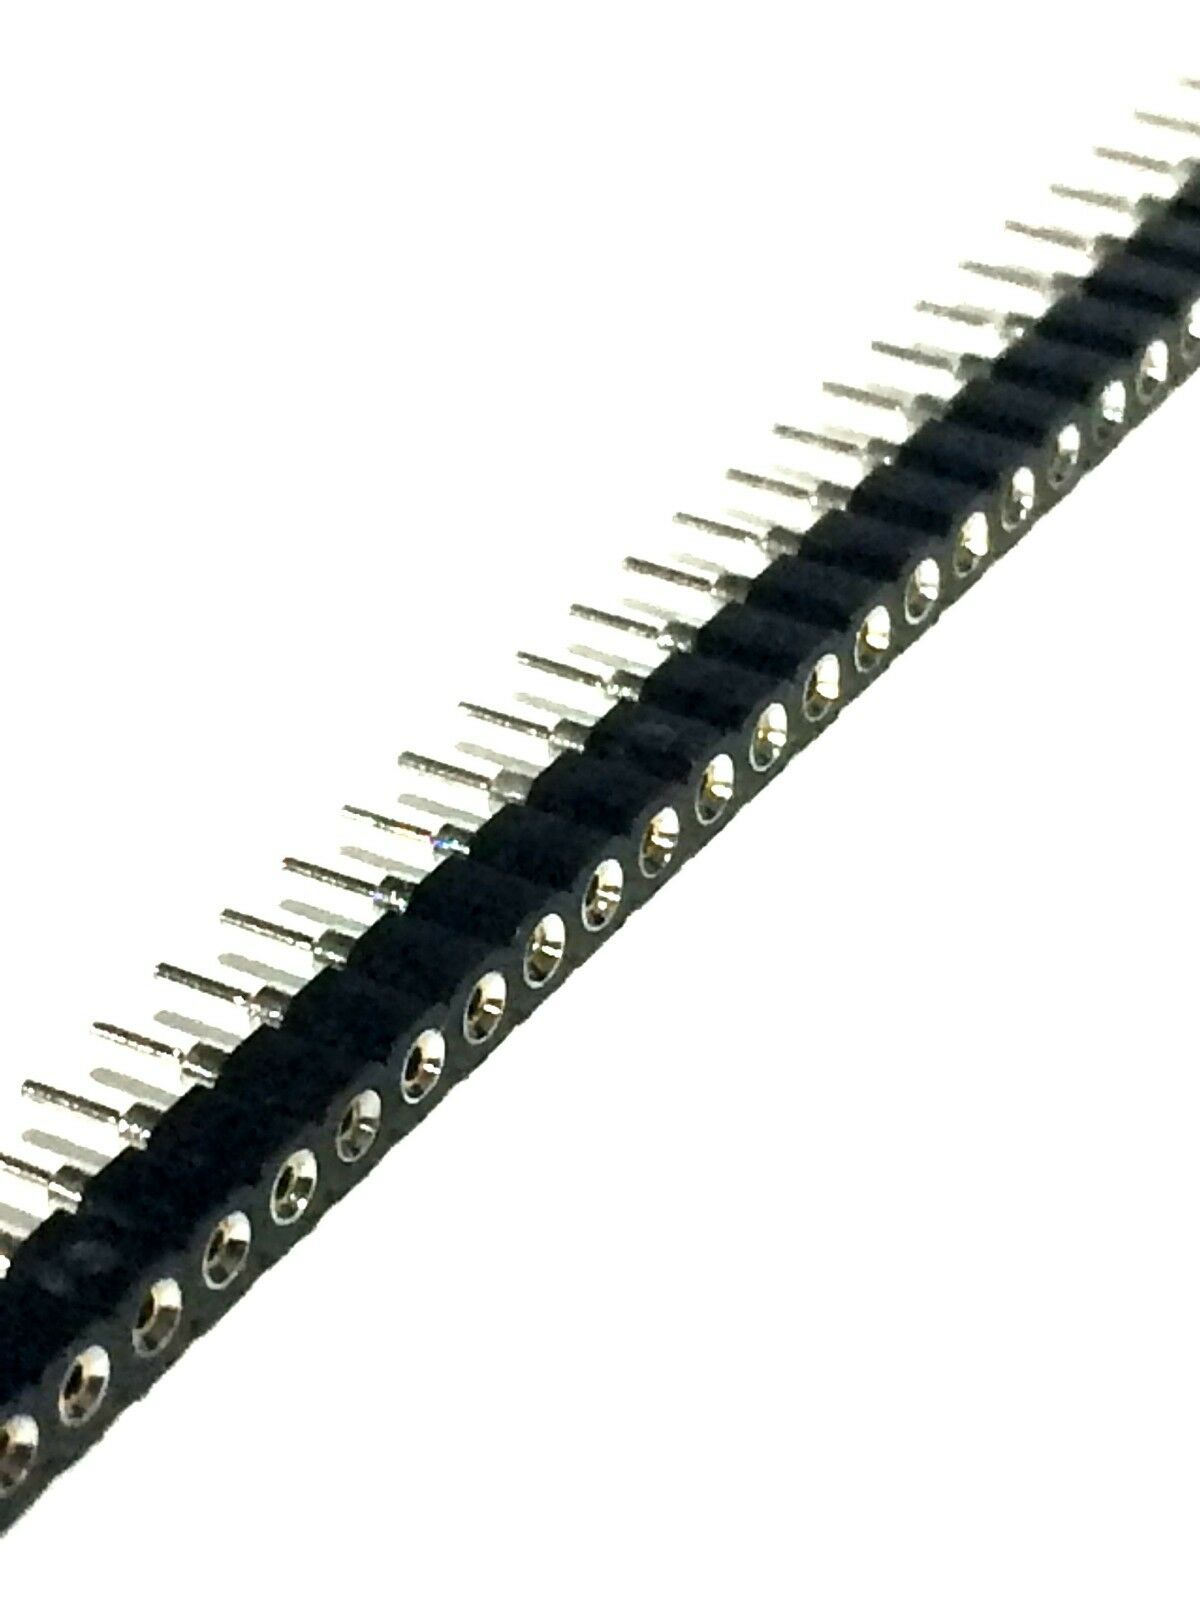 40 Pin Sip Socket (1 Pc) Breakable Transistor Socket, High Quality. Usa Seller!